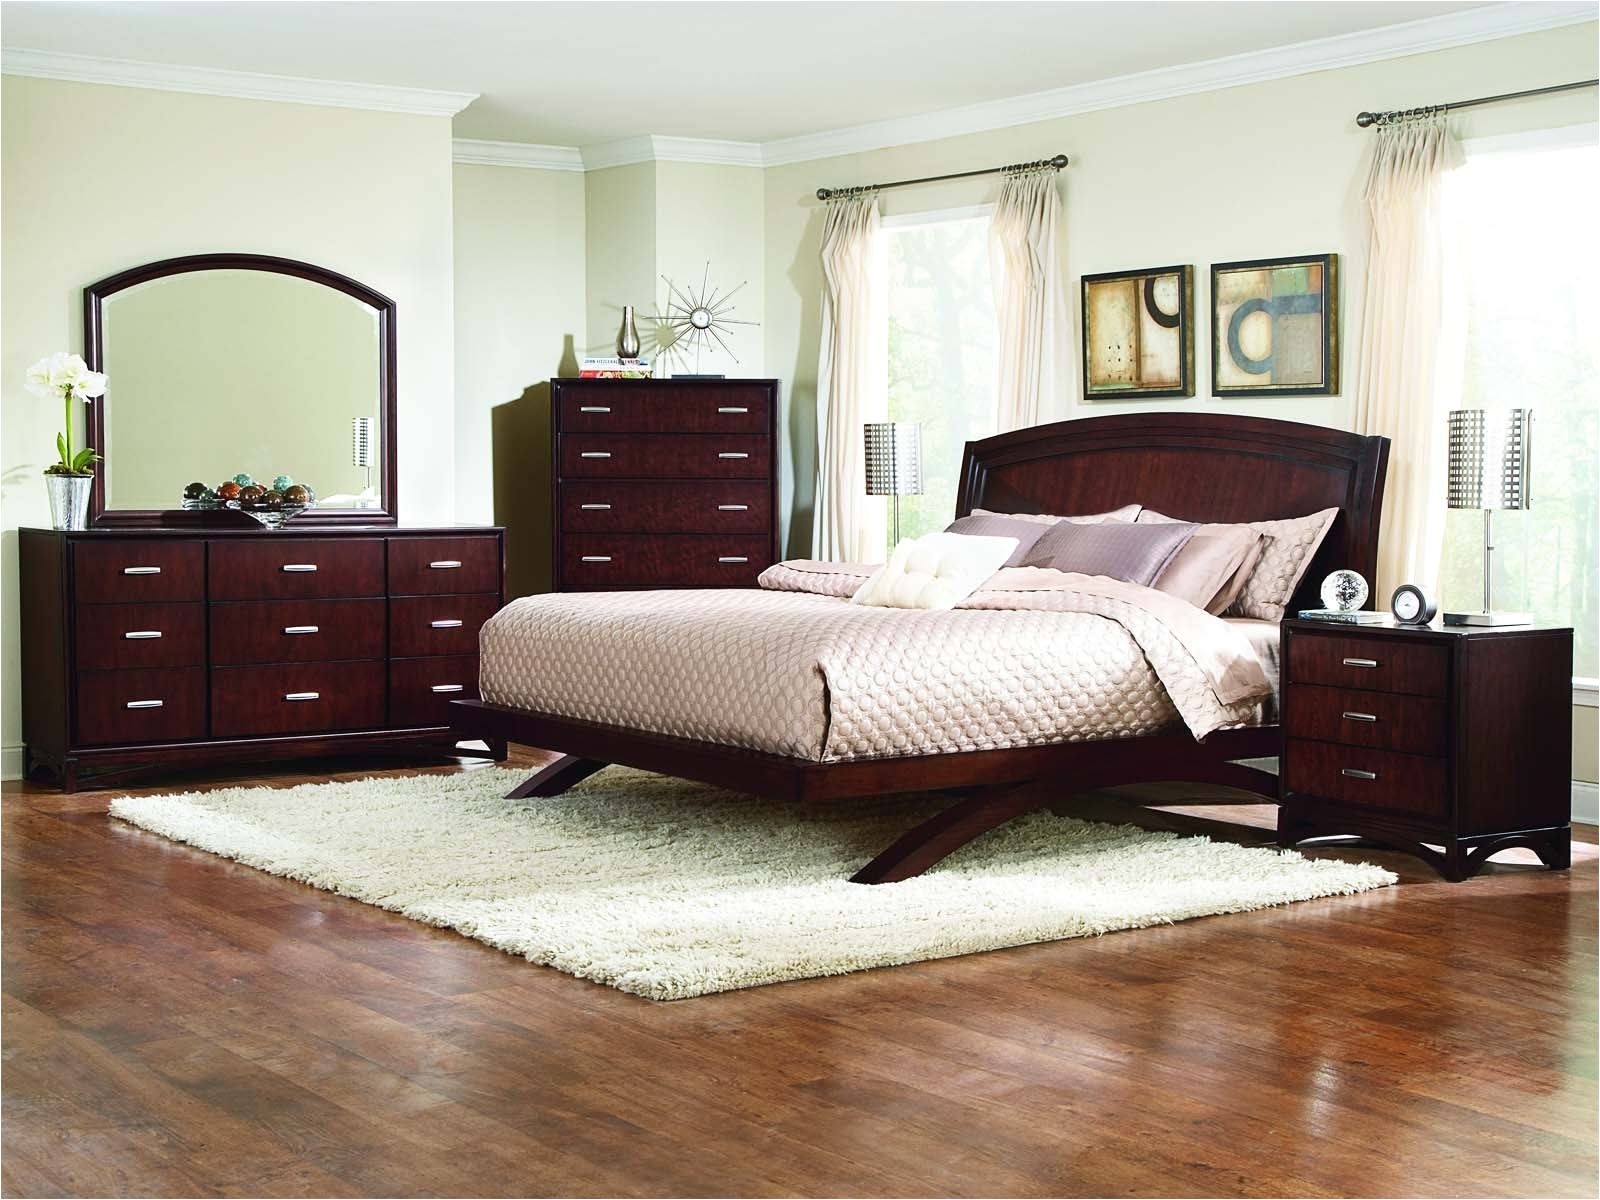 Ashley Furniture Porter Bedroom Set Beautiful ashley Furniture Porter Bedroom Set Reviews In